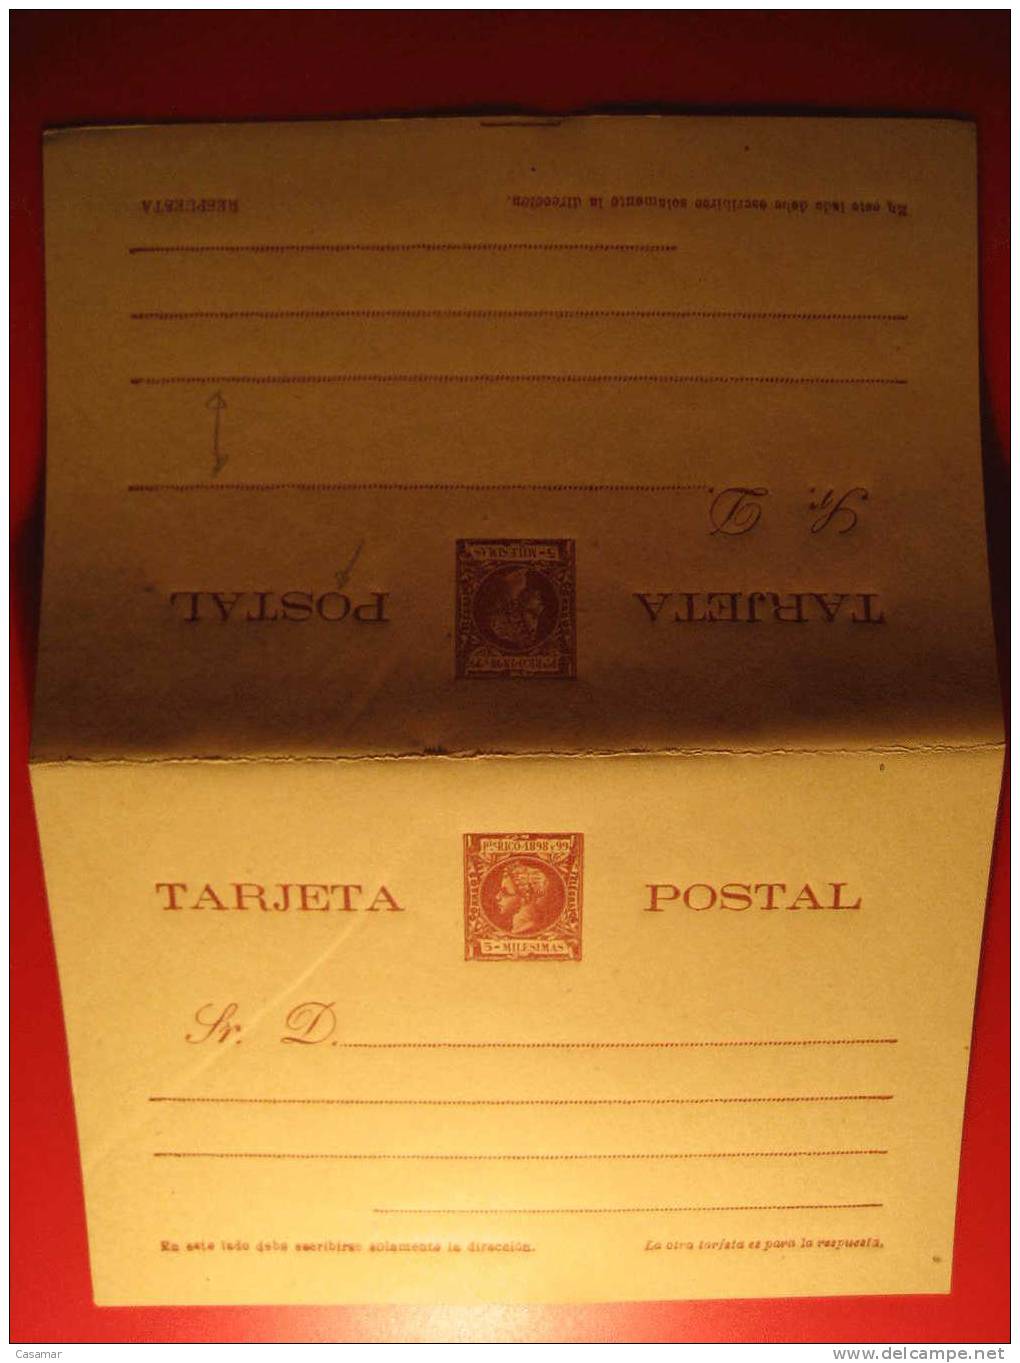 Nº13 5m Diversas Variedades De Composicion Tarjeta Doble + Respuesta Entero Postal Stationery Postcard Puerto Rico - Puerto Rico